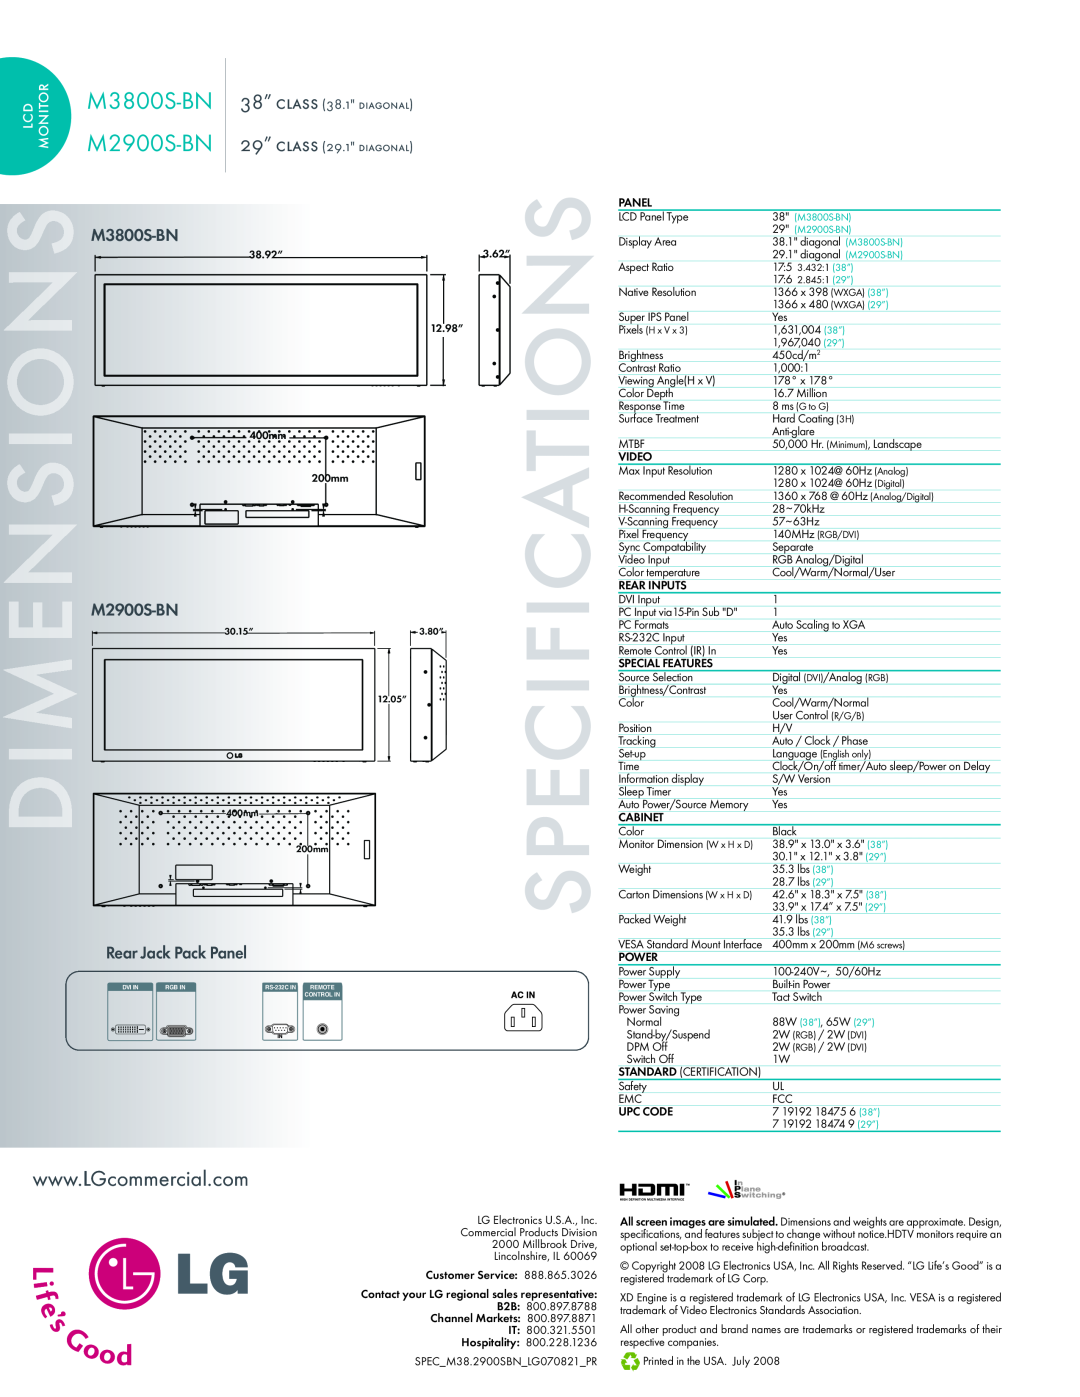 LG Electronics M2900SBN, M3800SBN 38” class 38.1 diagonal, 29” class 29.1 diagonal, M3800S-BN, M2900S-BN, lcd monitor 